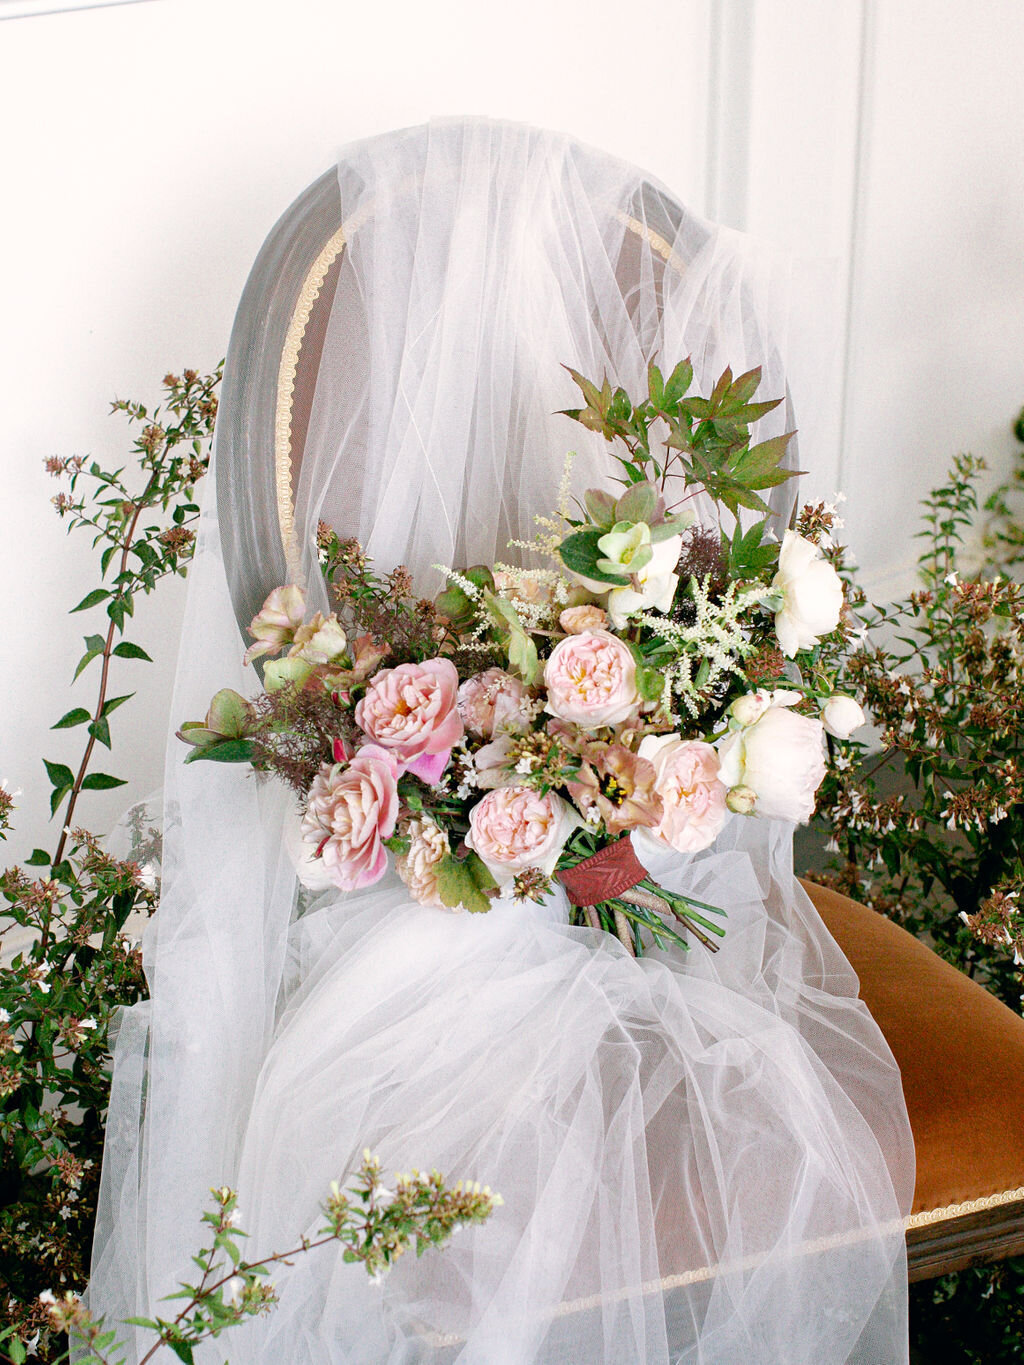 max-owens-design-english-floral-wedding-02-bouquet-veil